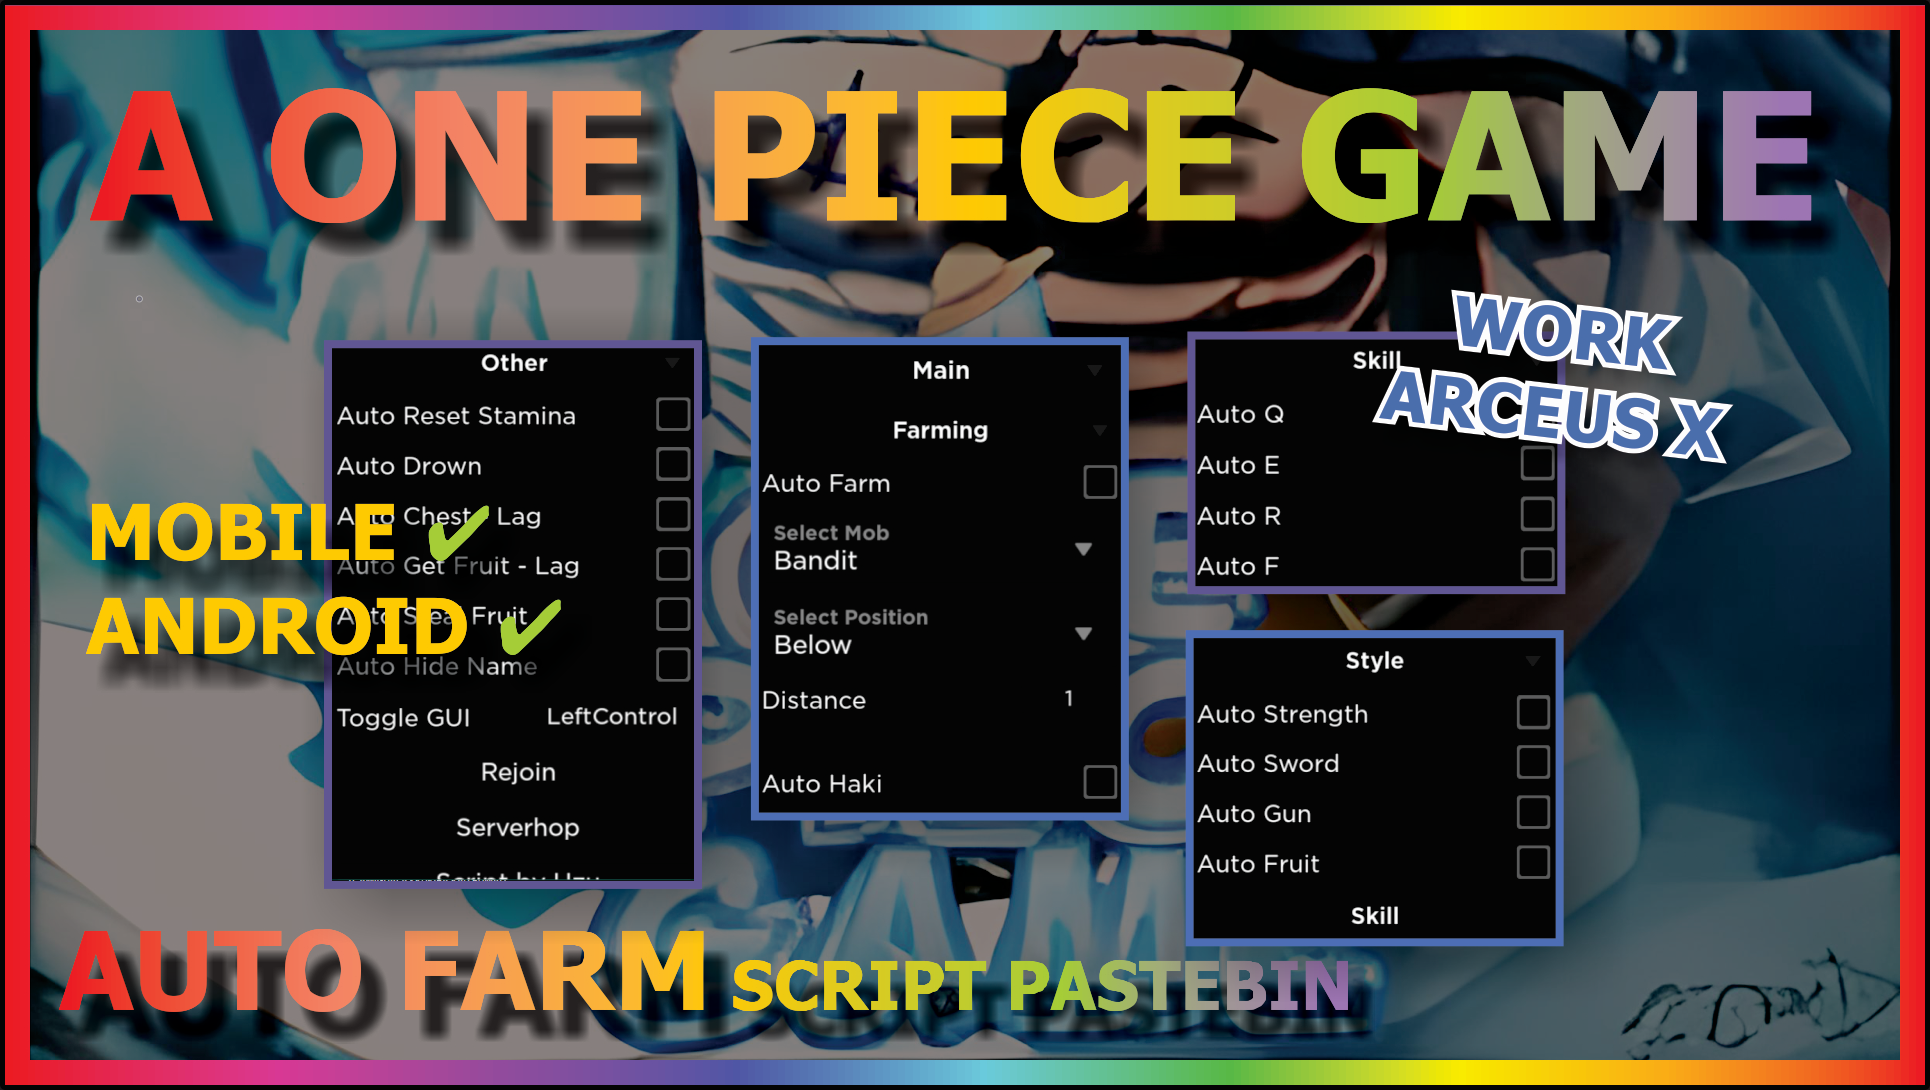 A 0ne piece game script - (AutoQuest, Autofarm) - Roblox-Scripter